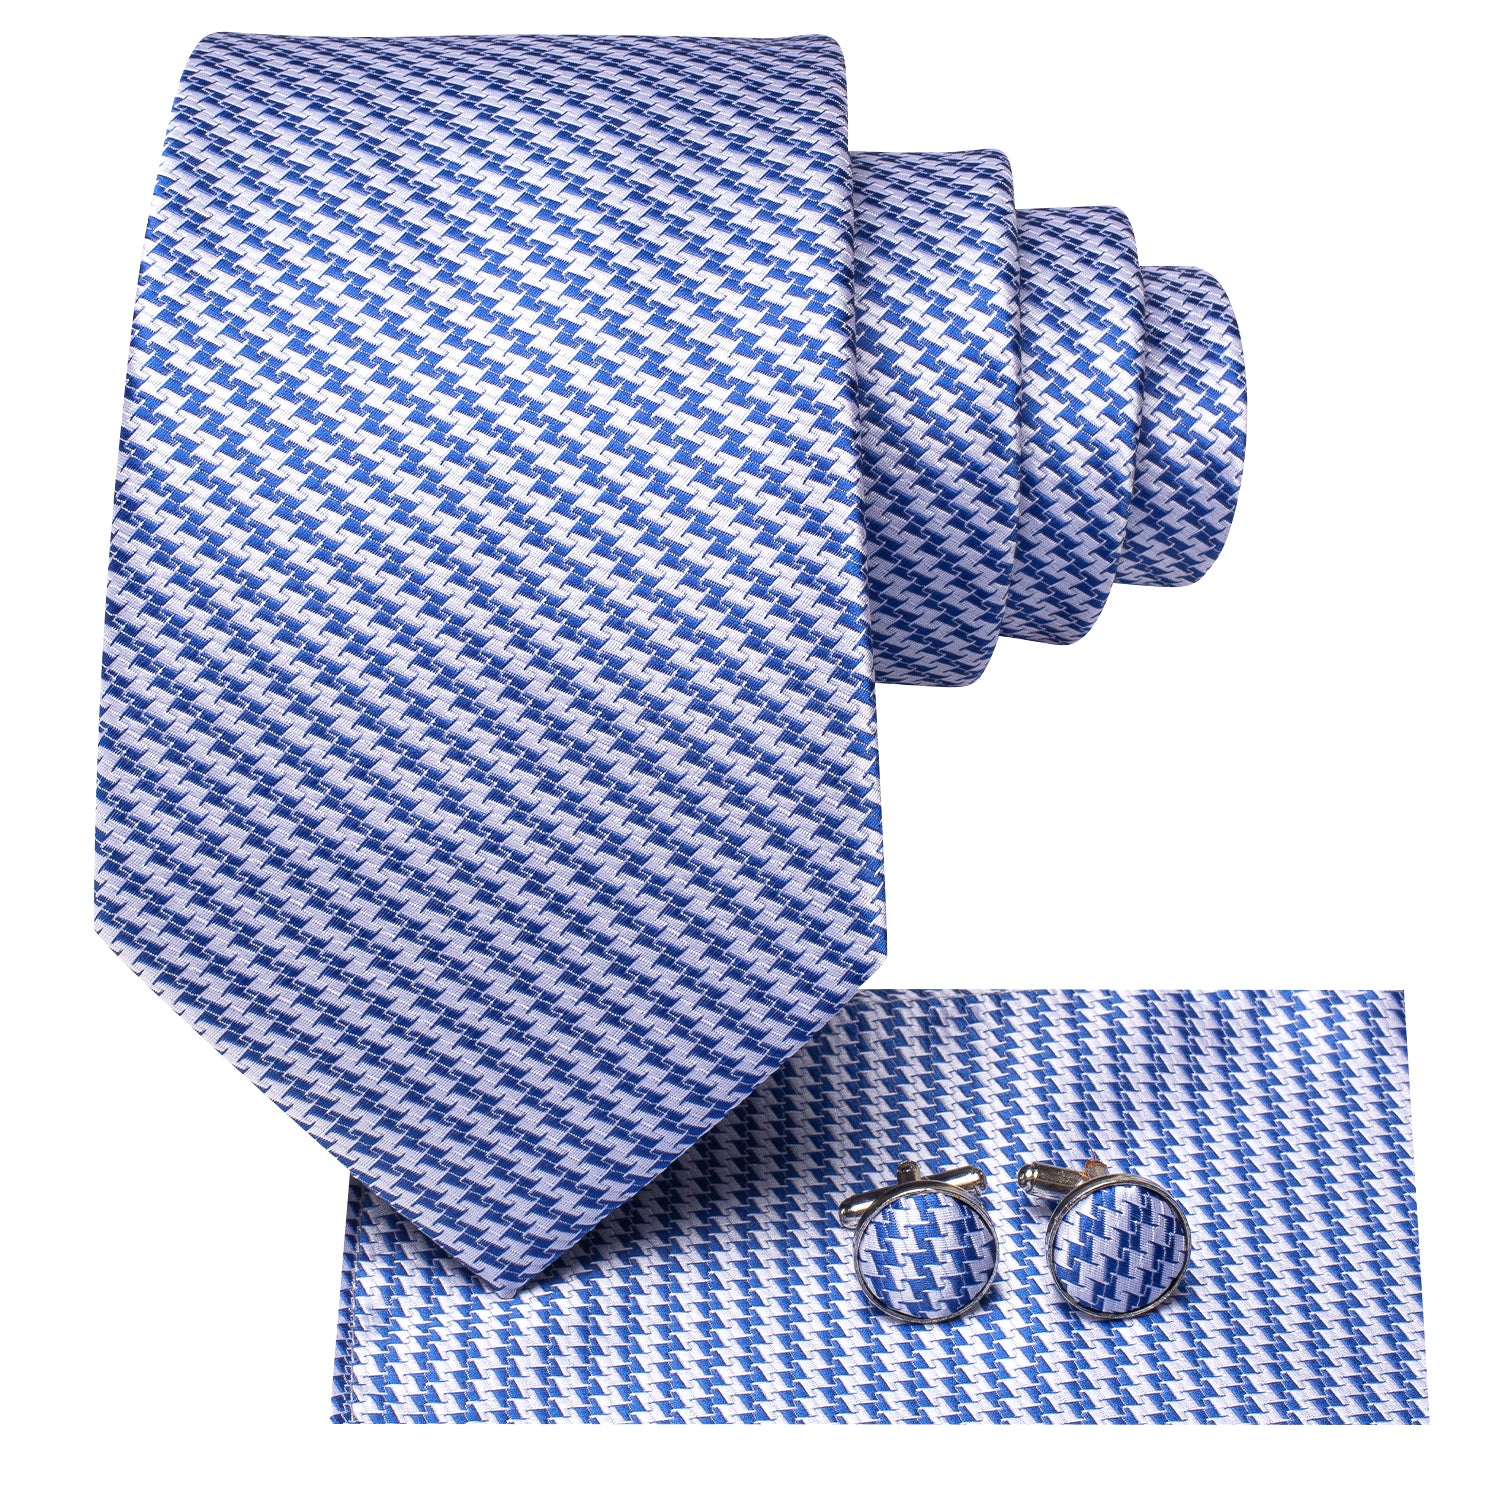 Blue White Sawtooth Tie Pocket Square Cufflinks Set